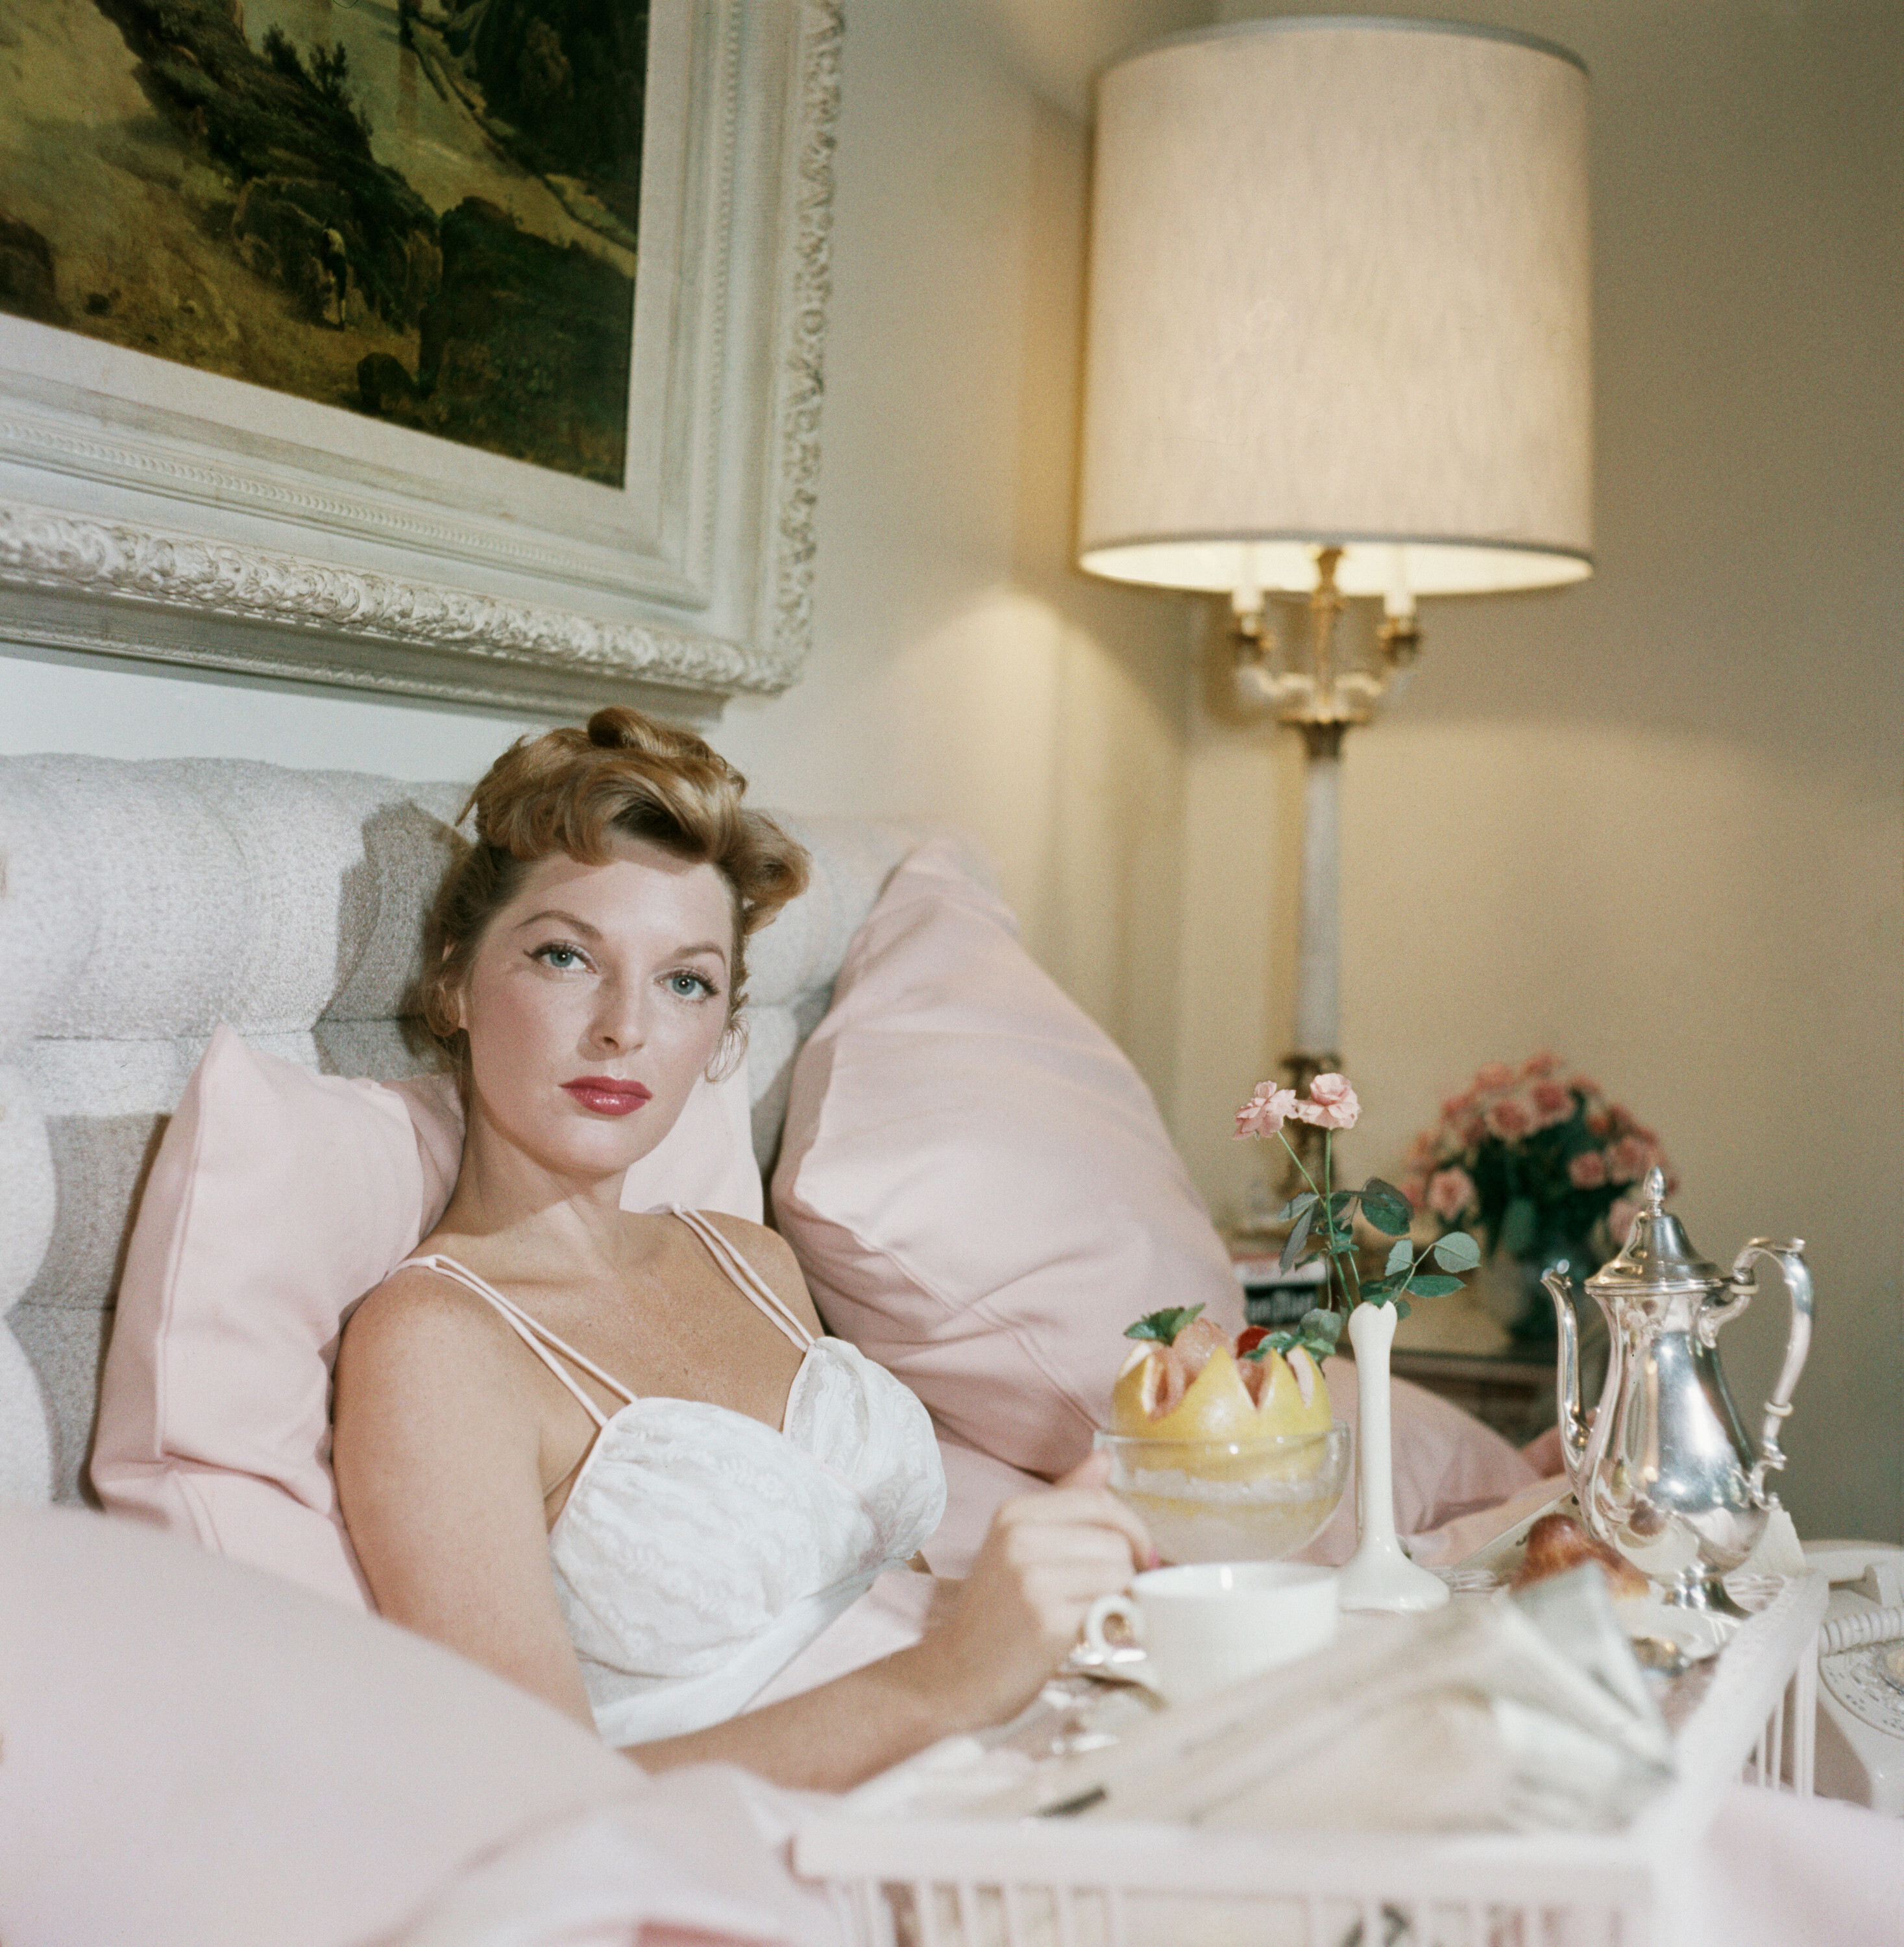 Джули Лондон, 1957 год. Фотограф Слим Ааронс